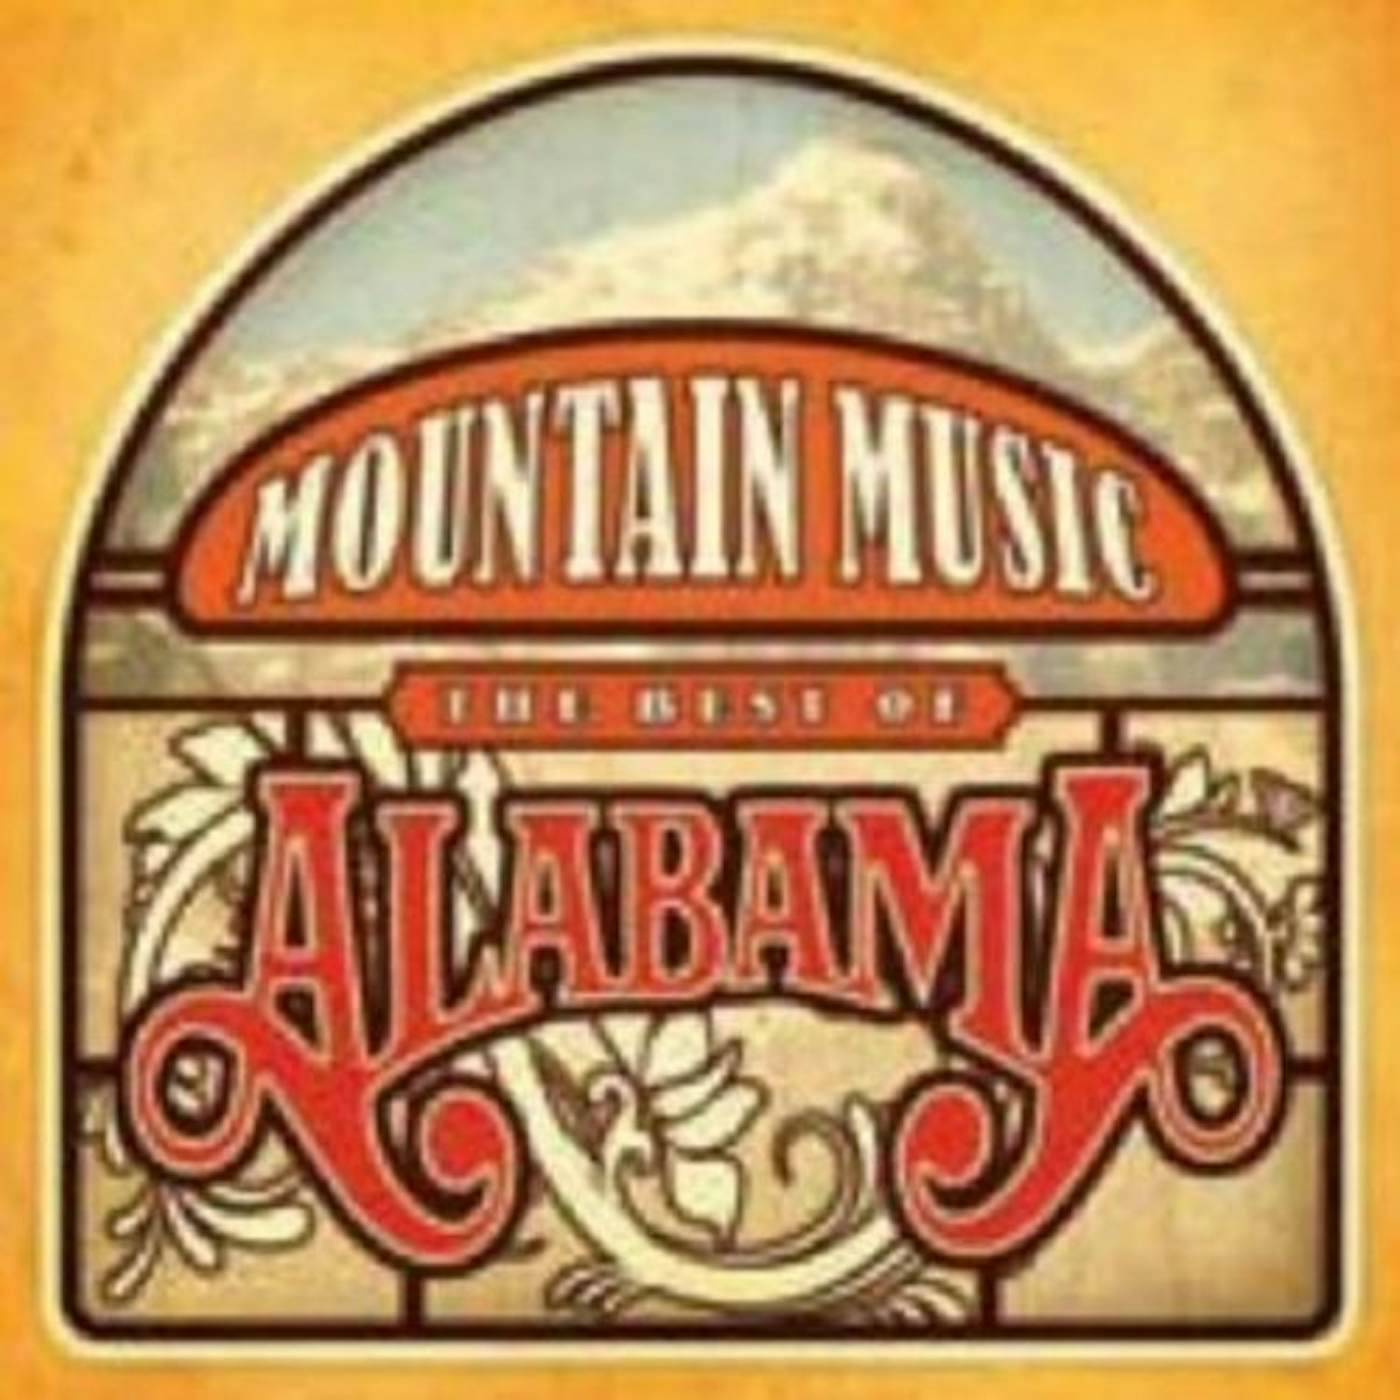 Alabama MOUNTAIN MUSIC: BEST OF CD